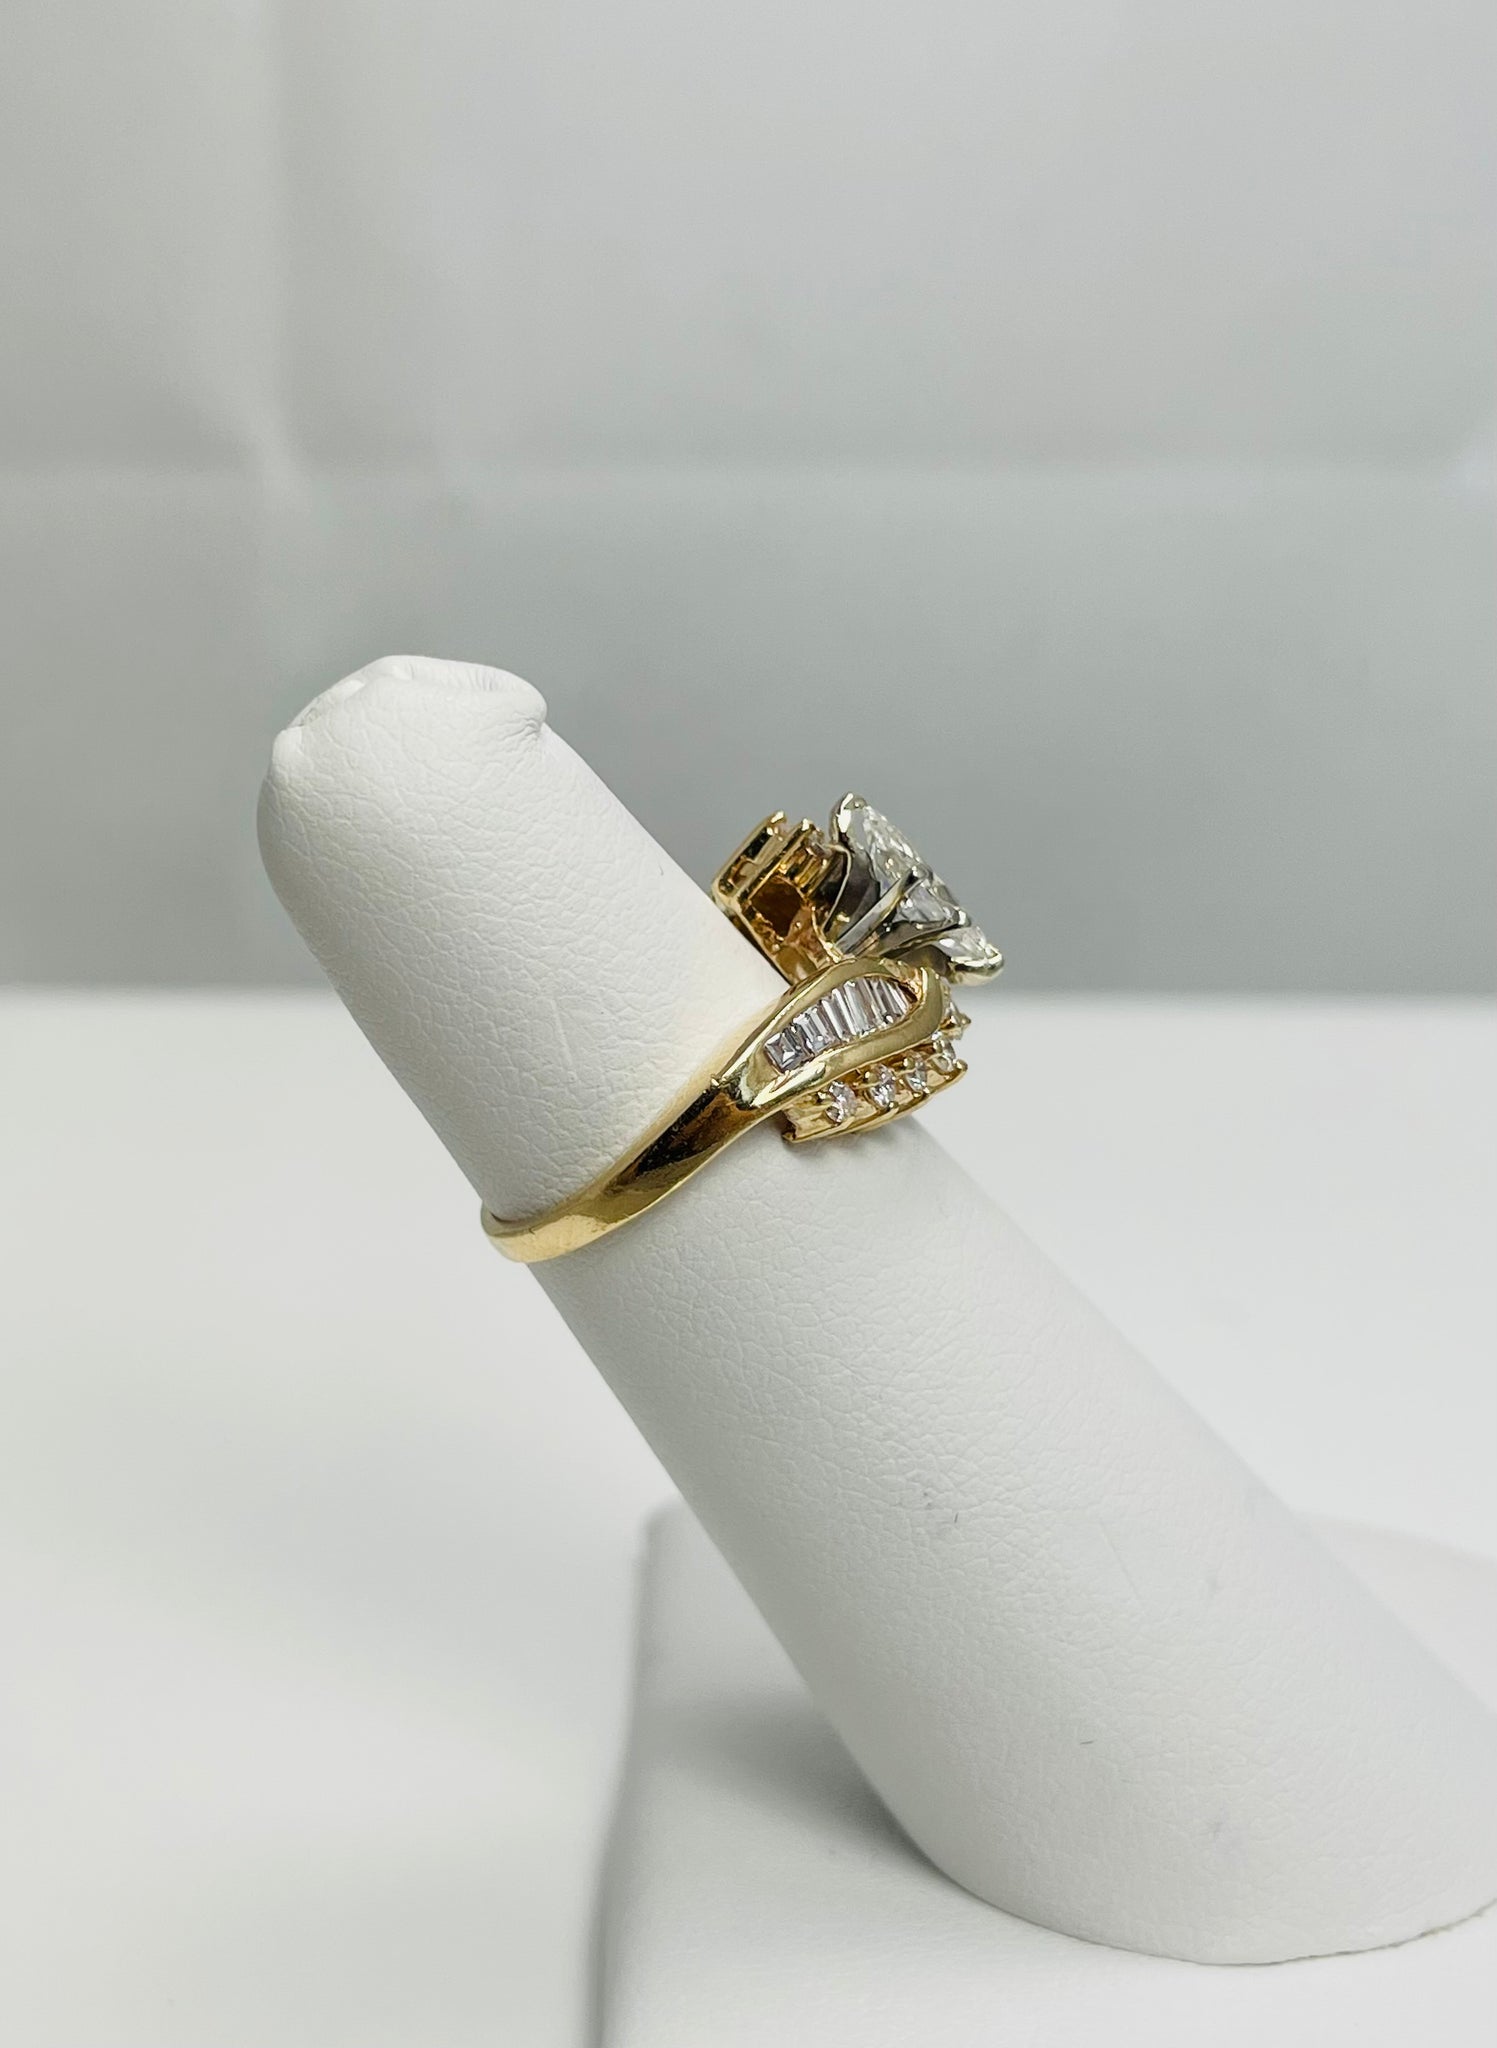 80ctw Natural Diamond 14k Yellow Gold Engagement Ring